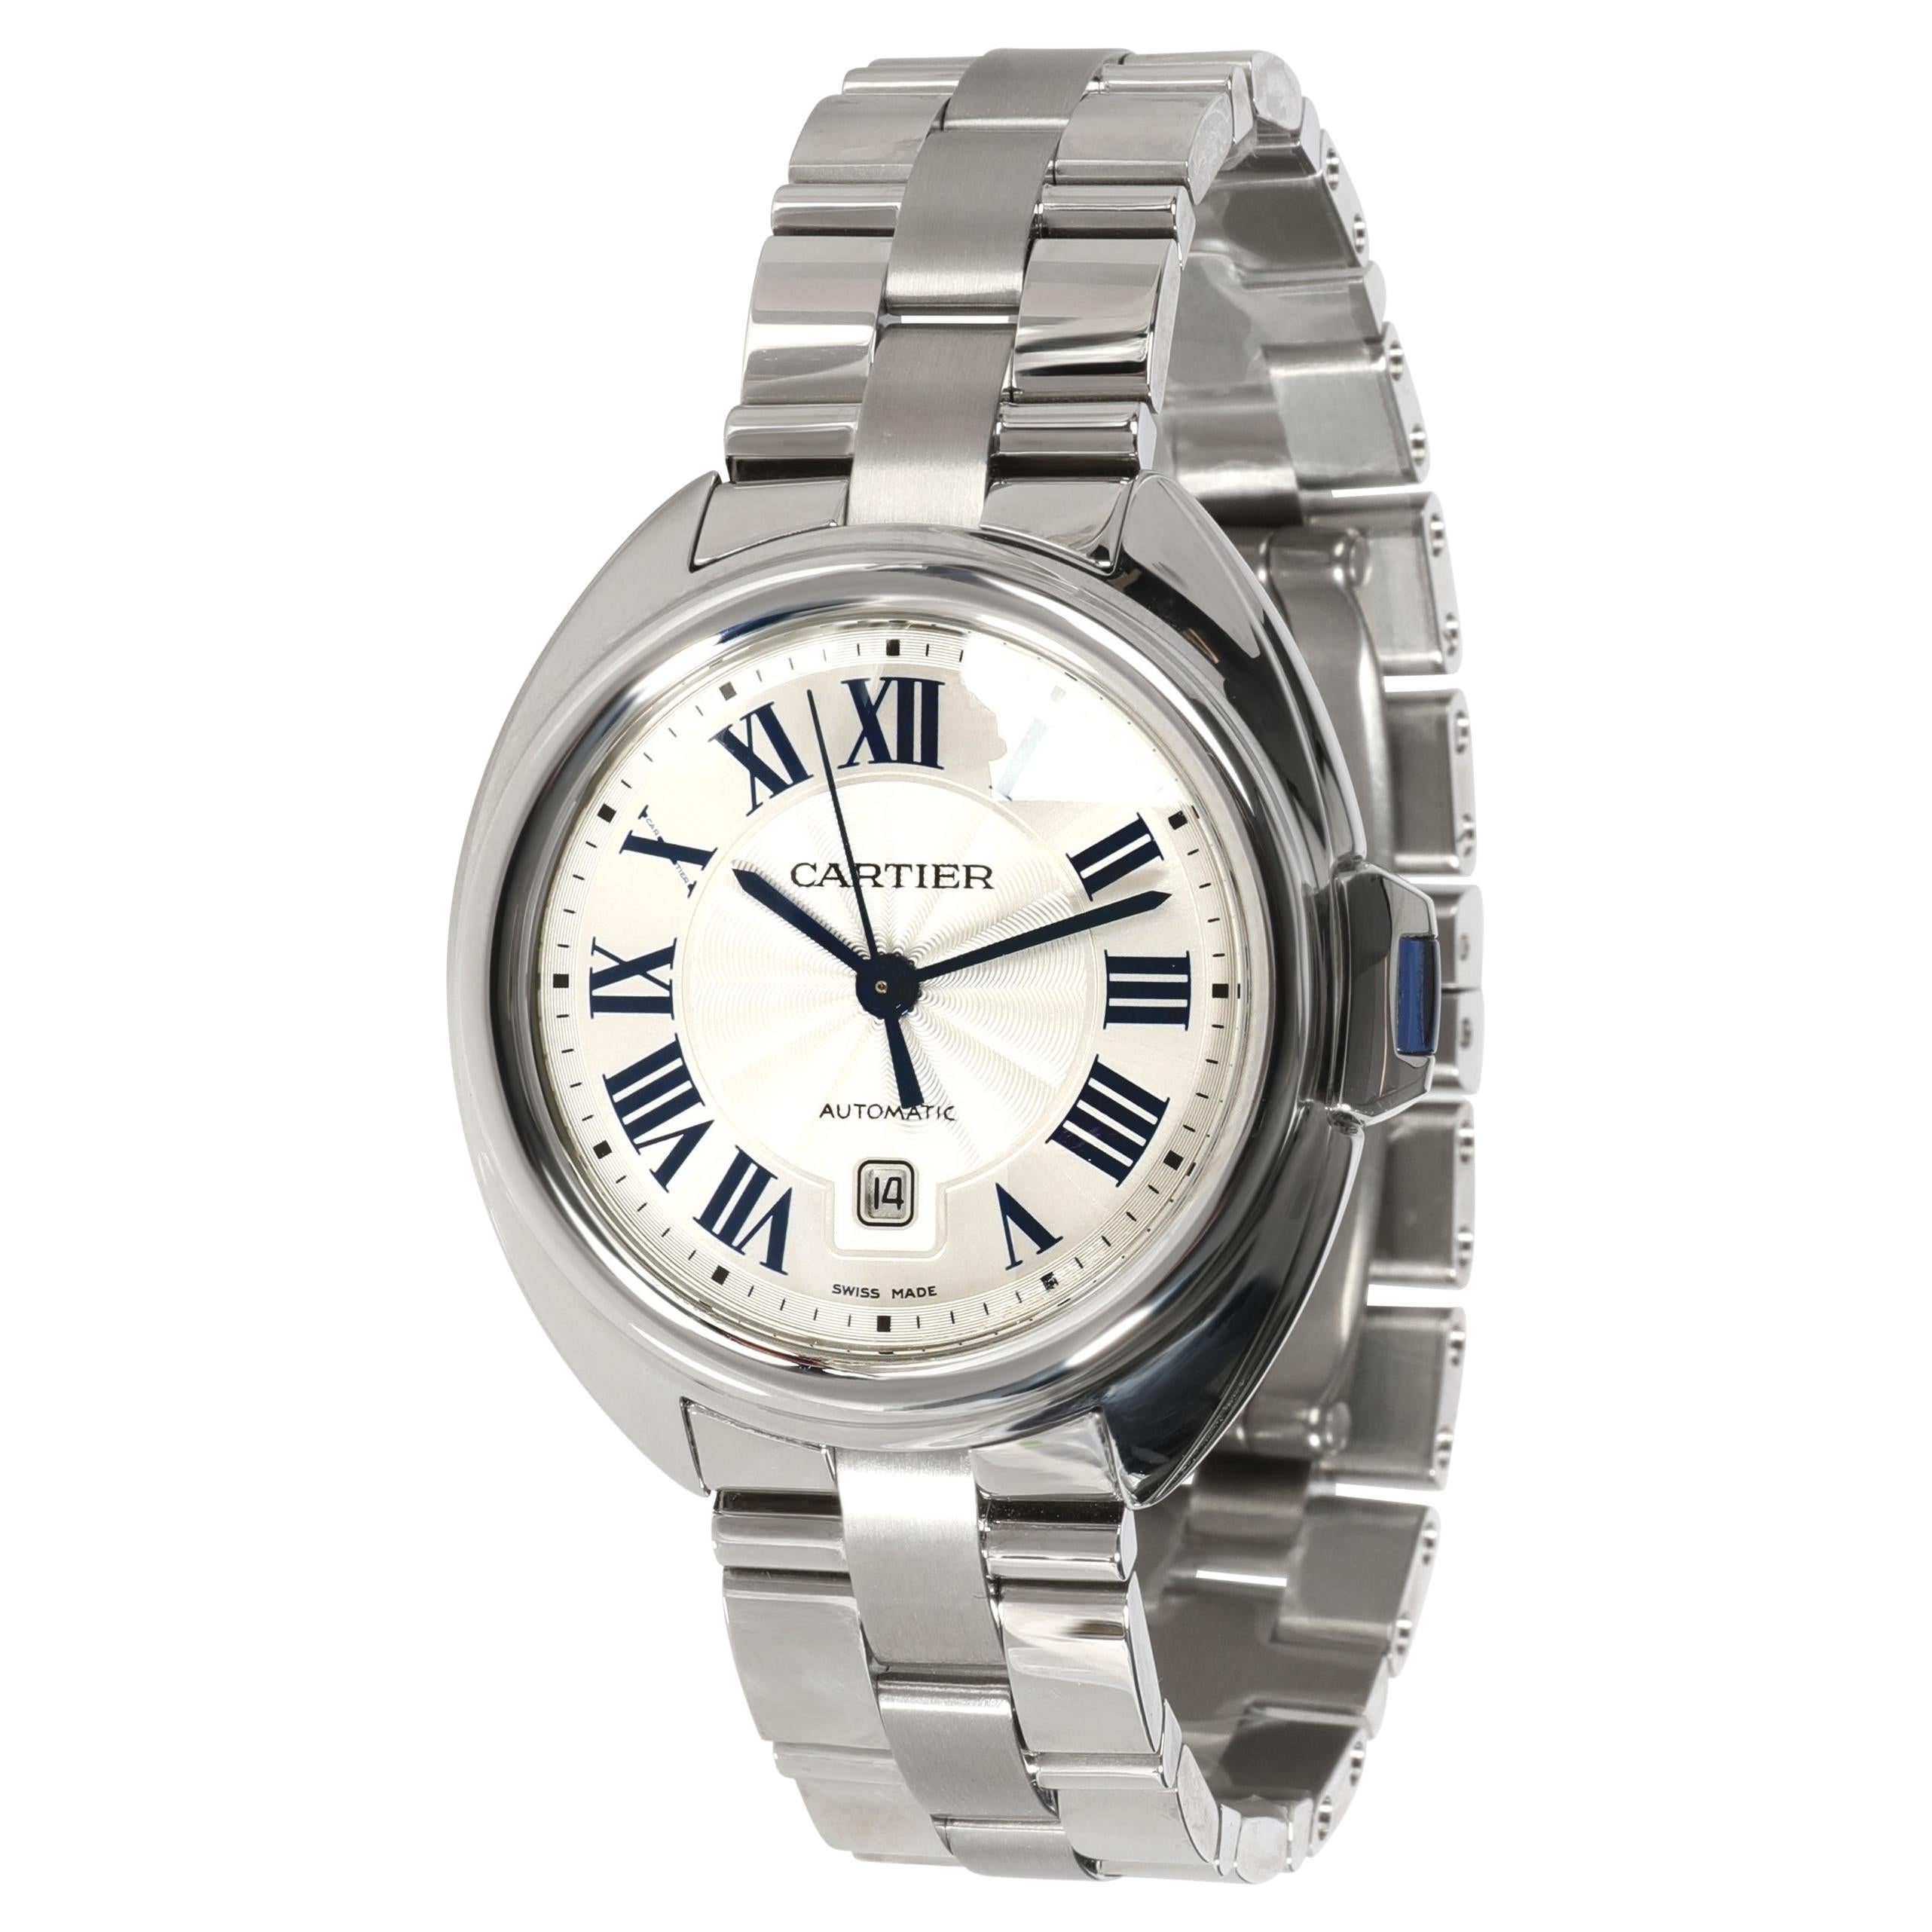 Cartier Cle de Cartier WSCL0005 Women's Watch in Stainless Steel